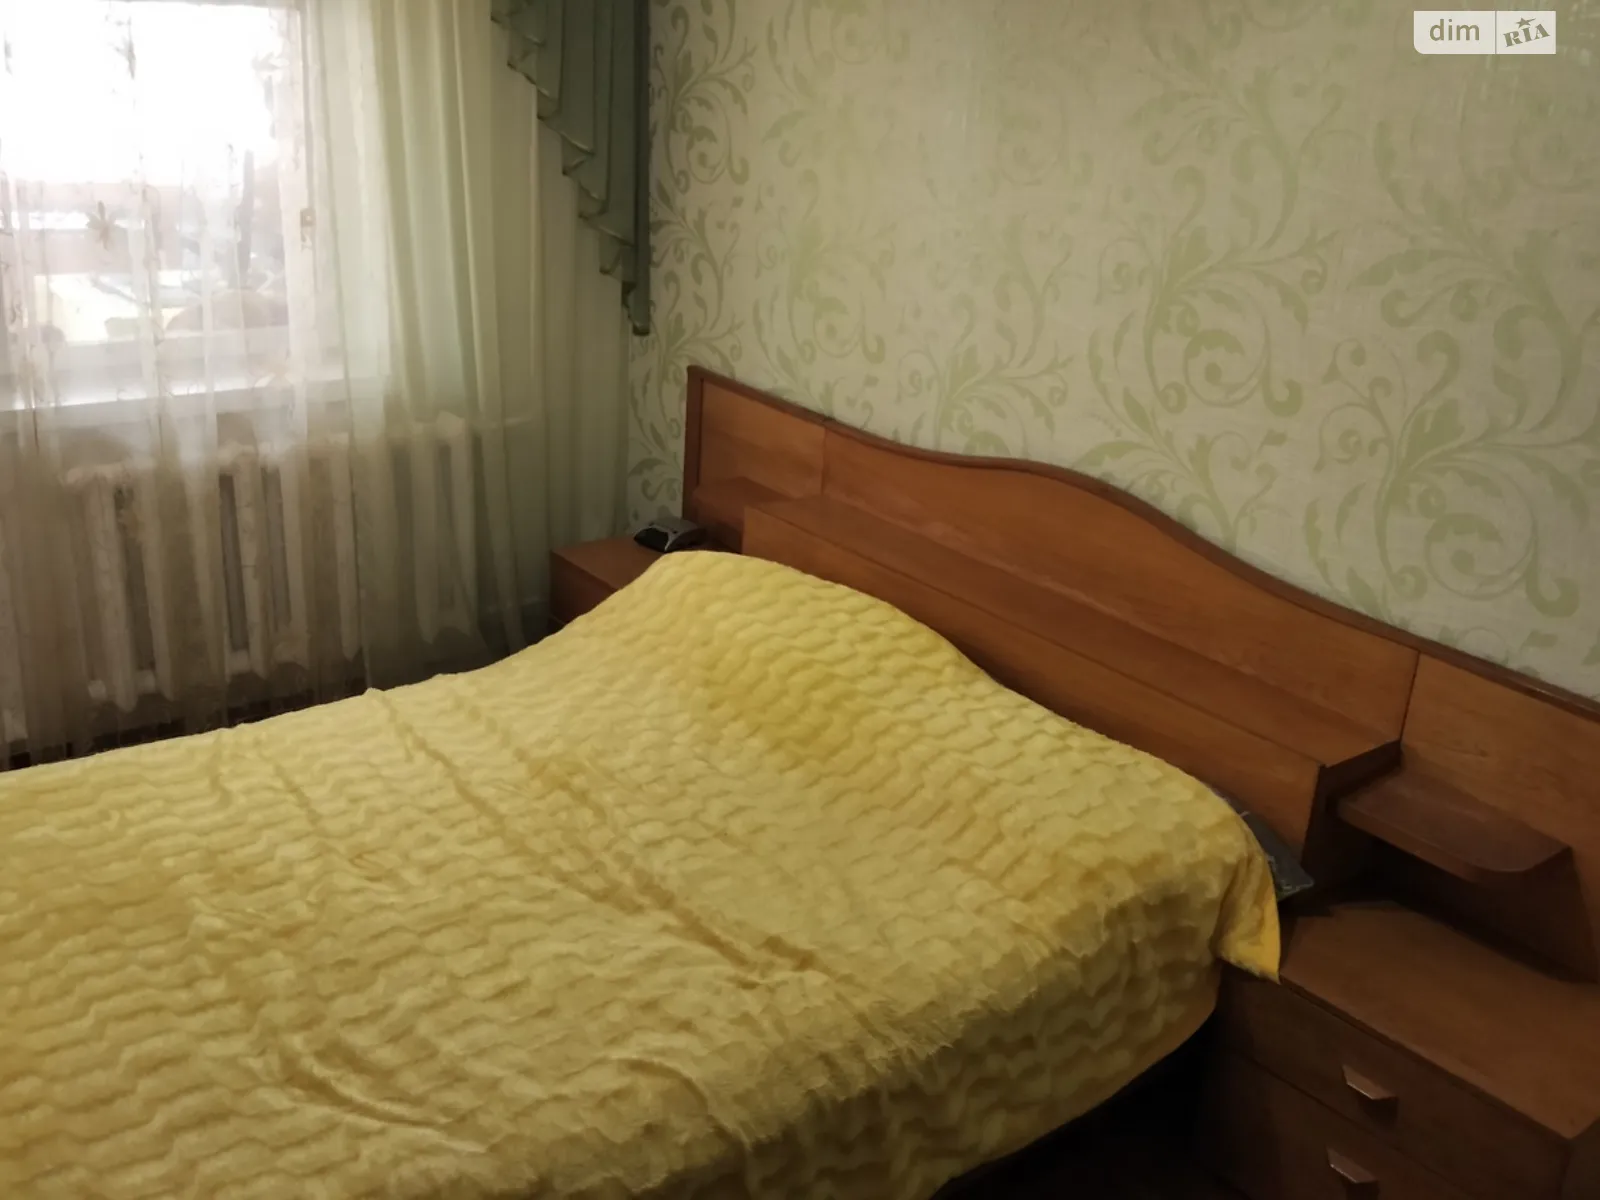 3-кімнатна квартира 65 кв. м у Луцьку, цена: 15500 грн